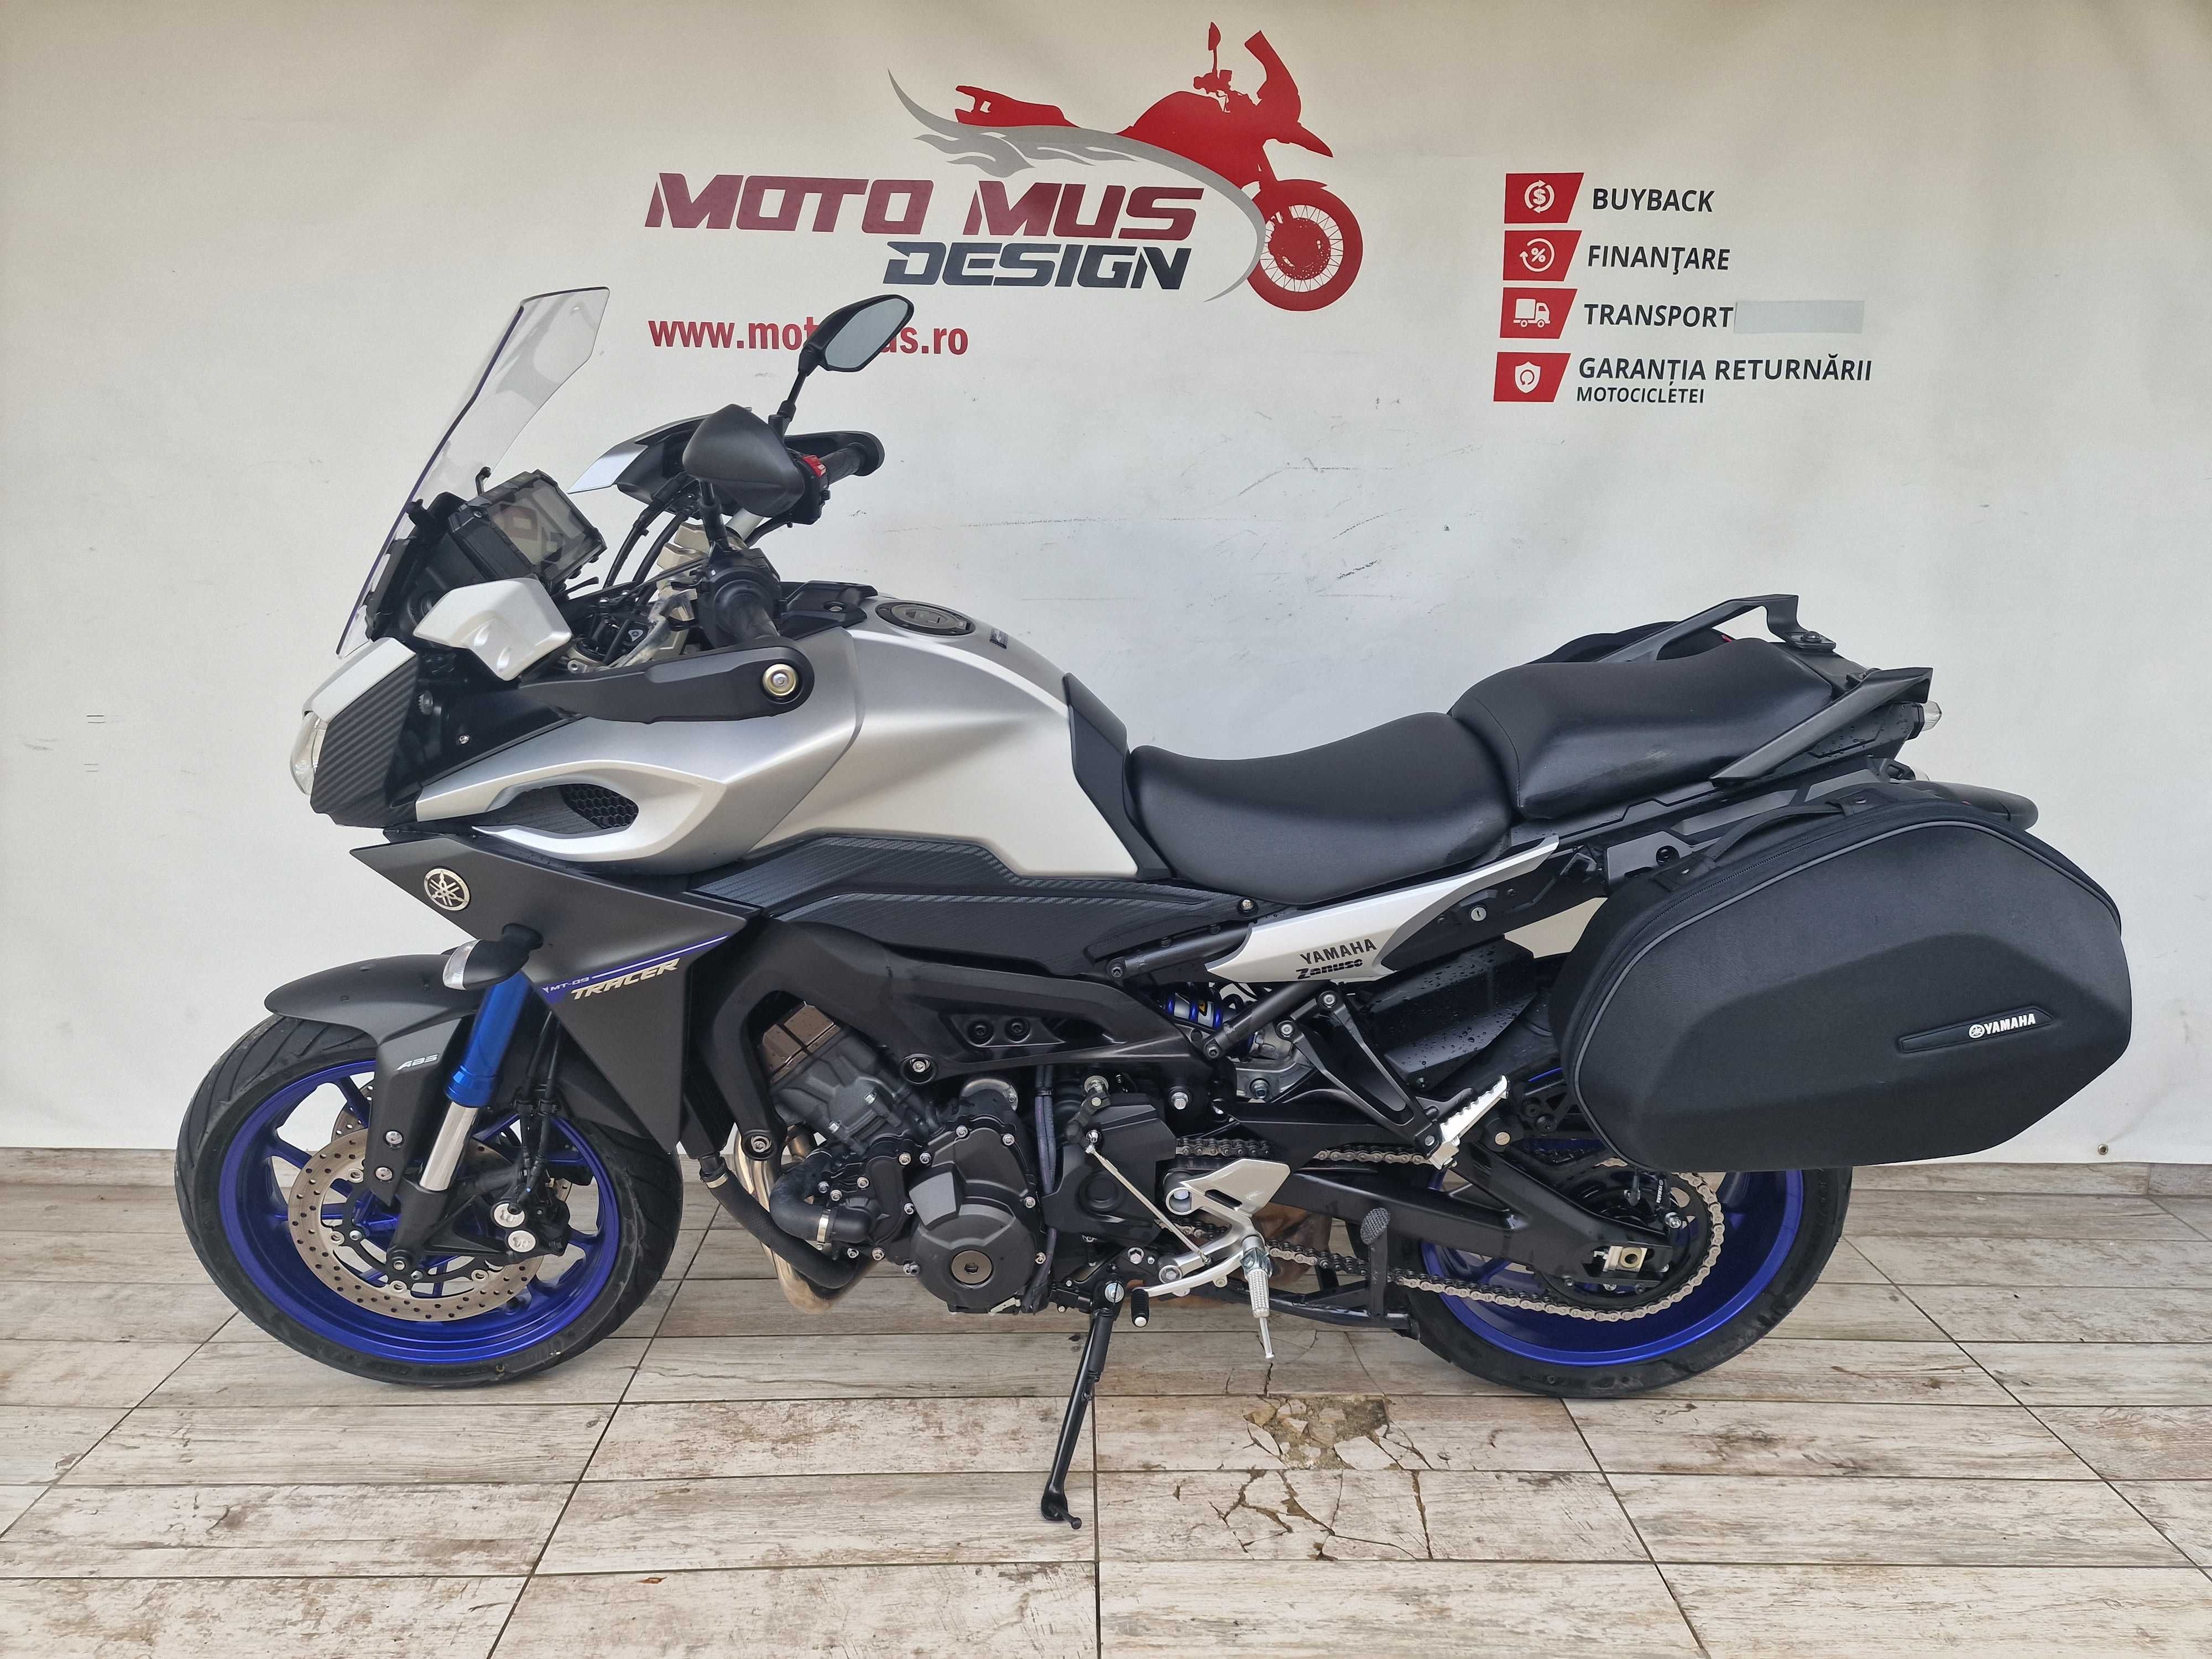 MotoMus vinde Motocicleta Yamaha MT-09 Tracer ABS 850cc 113CP - Y03133